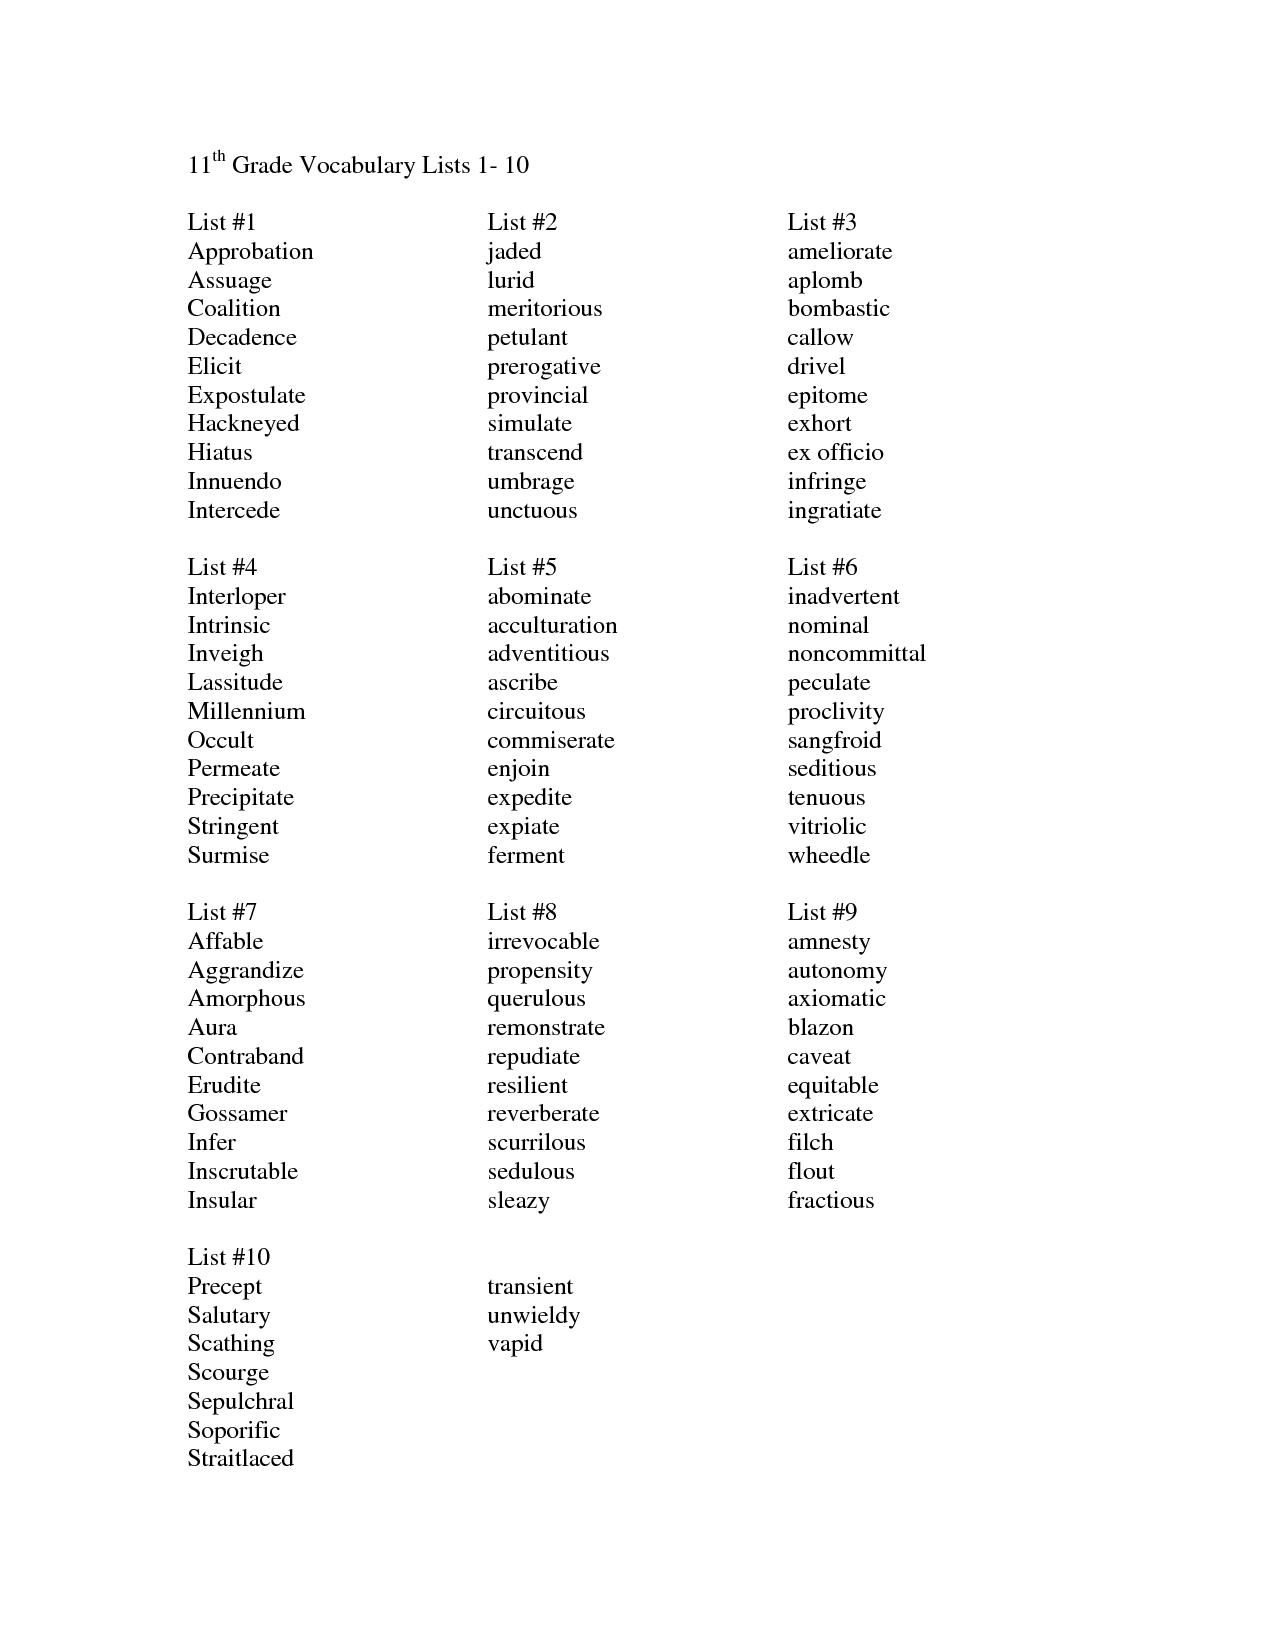 10th Grade Vocabulary Word List Image